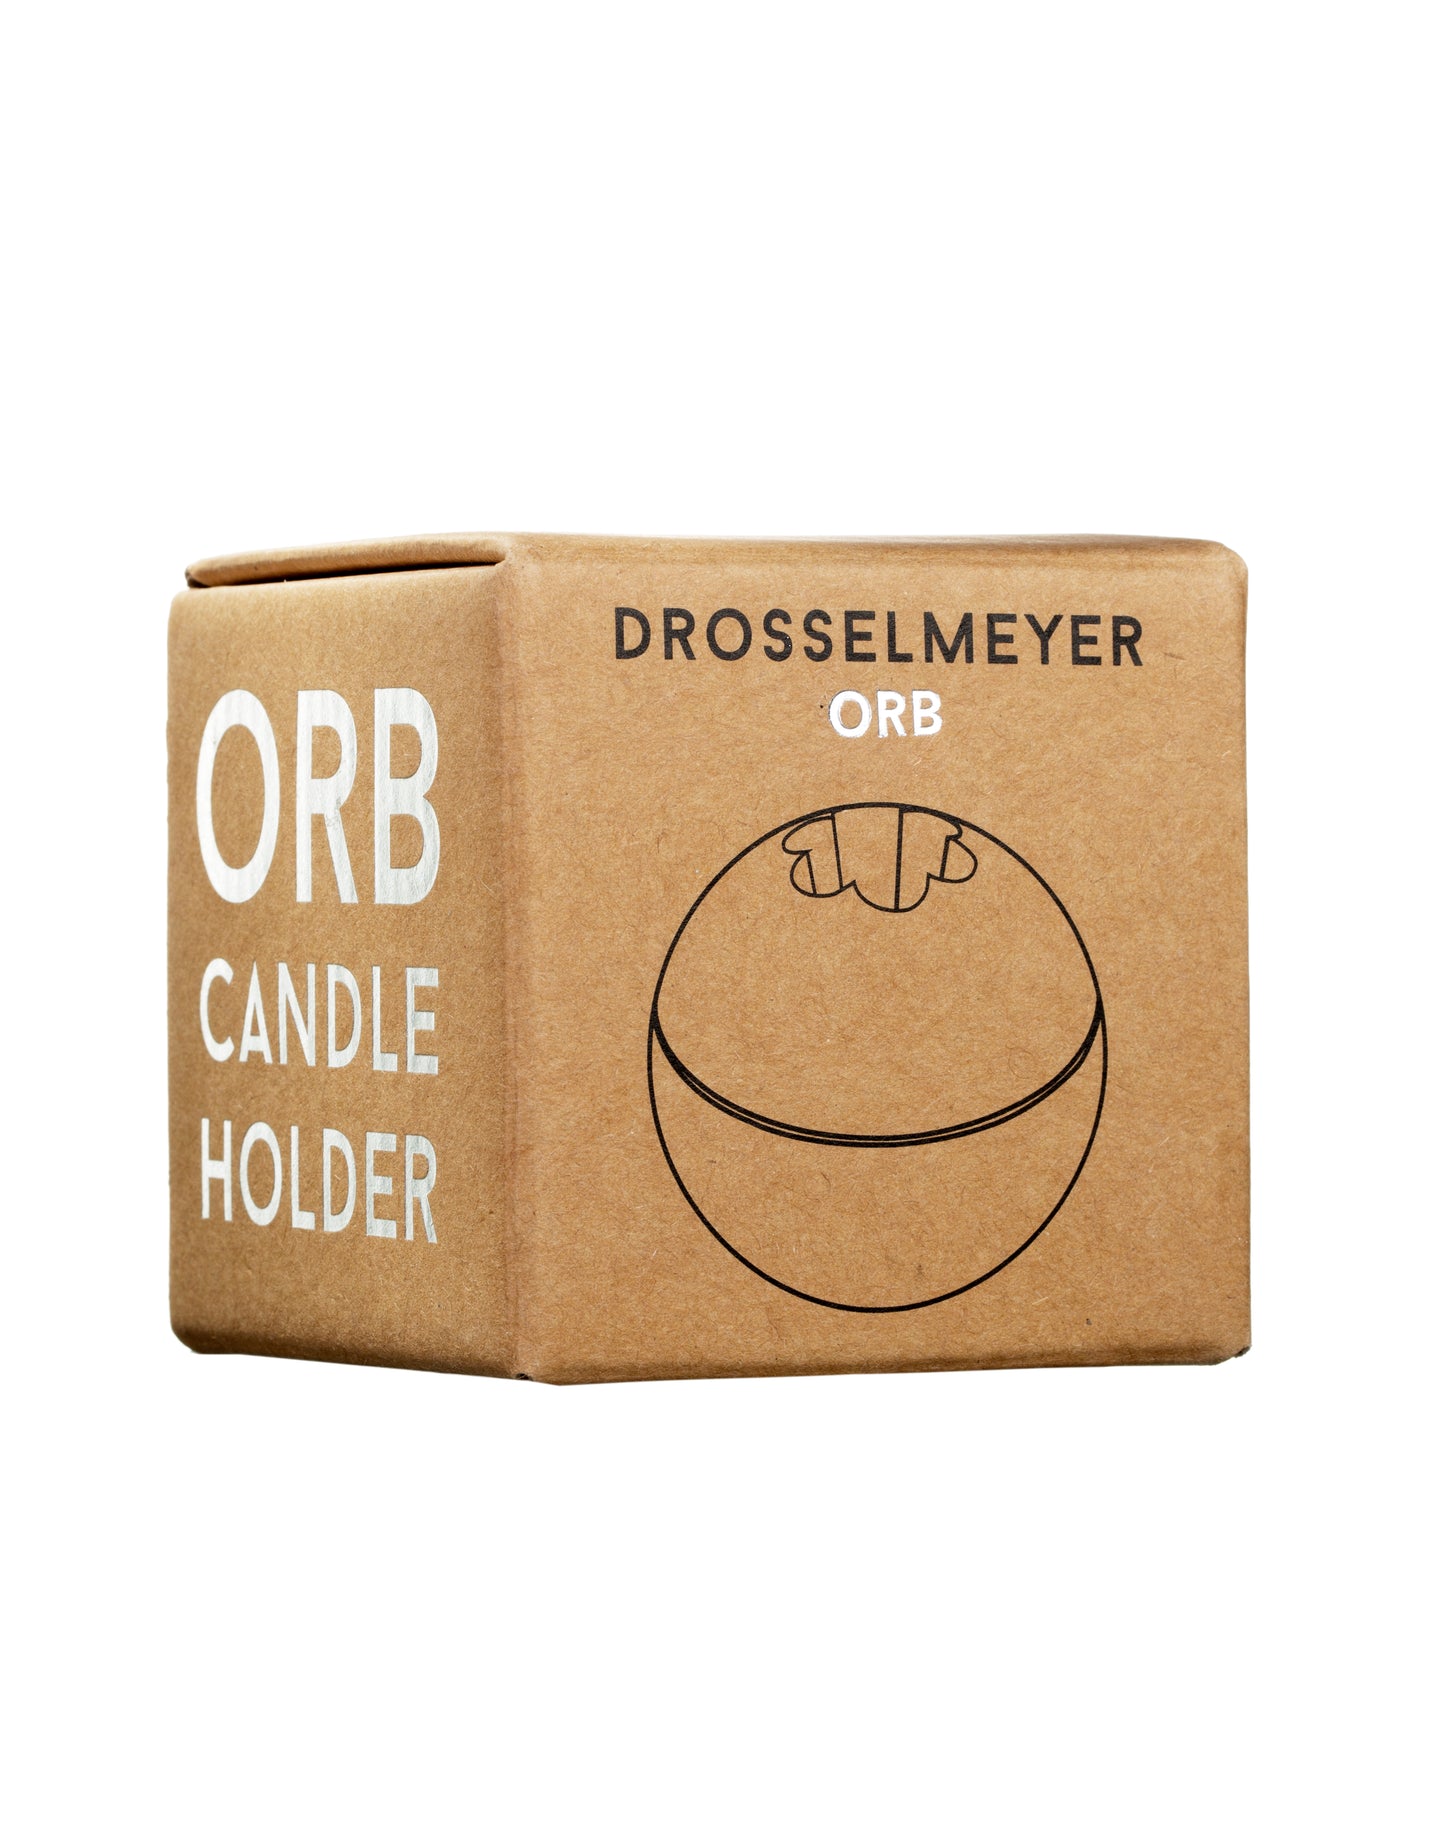 The Orb Candleholder, black